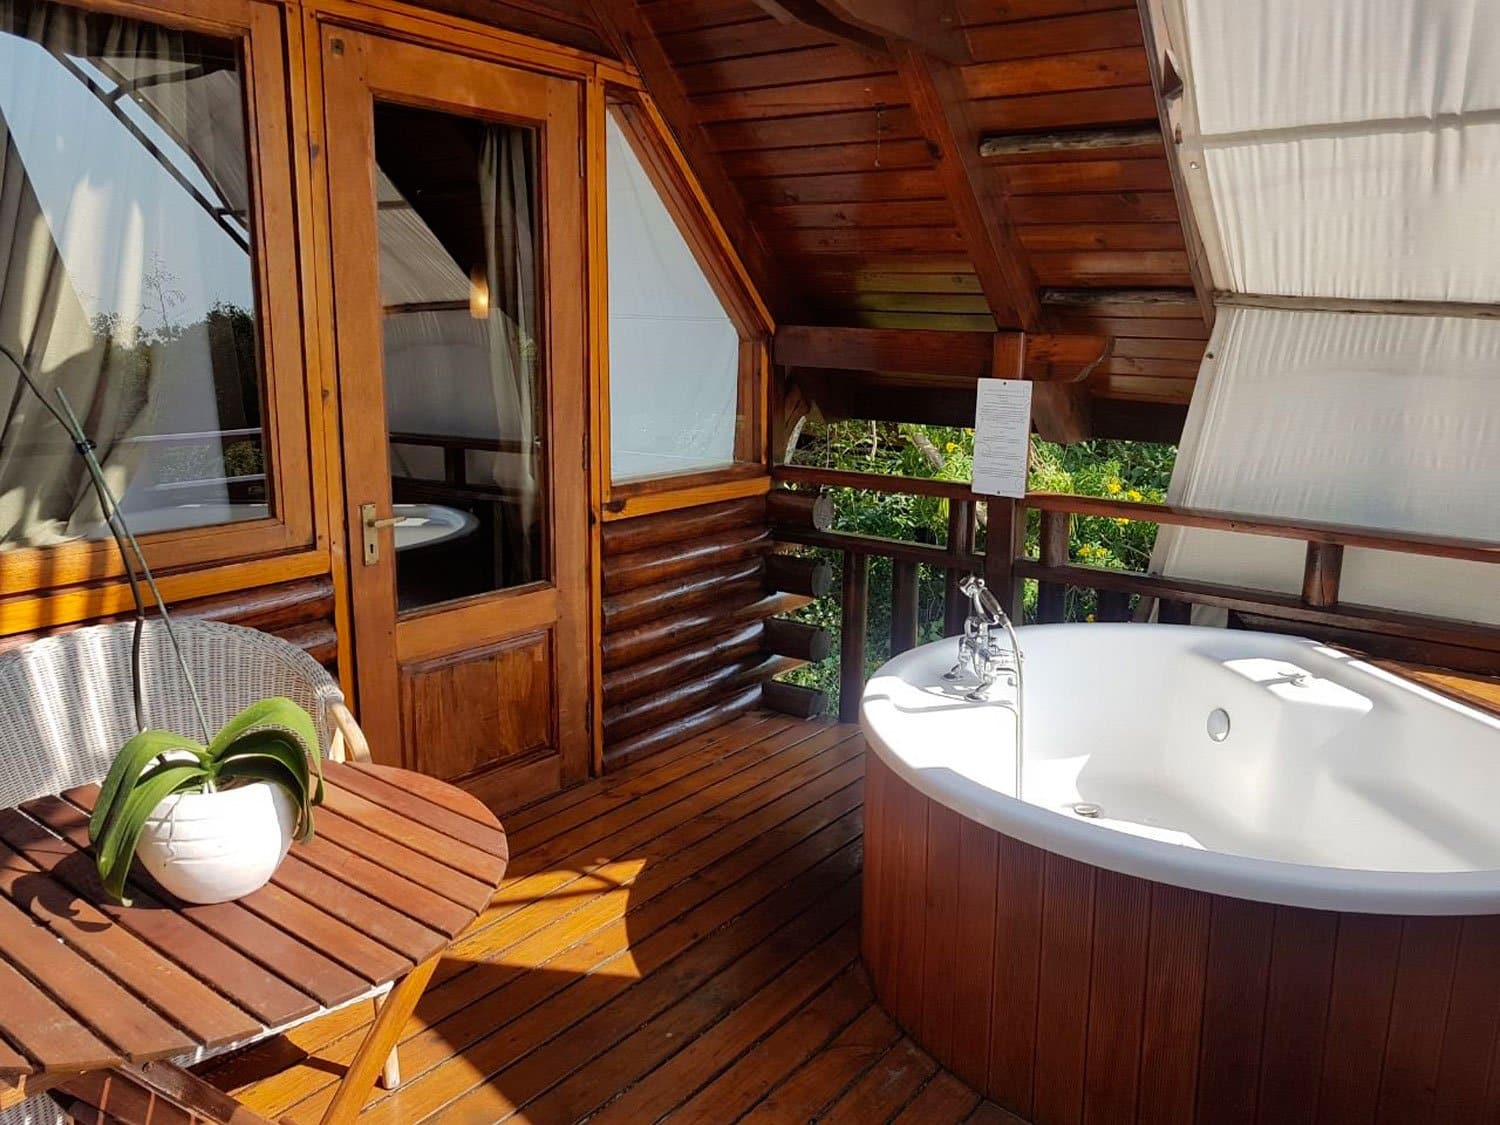 ARTICLE-Reunion Island's regional booking platform welcomes roche Tamarin Lodges & Spa